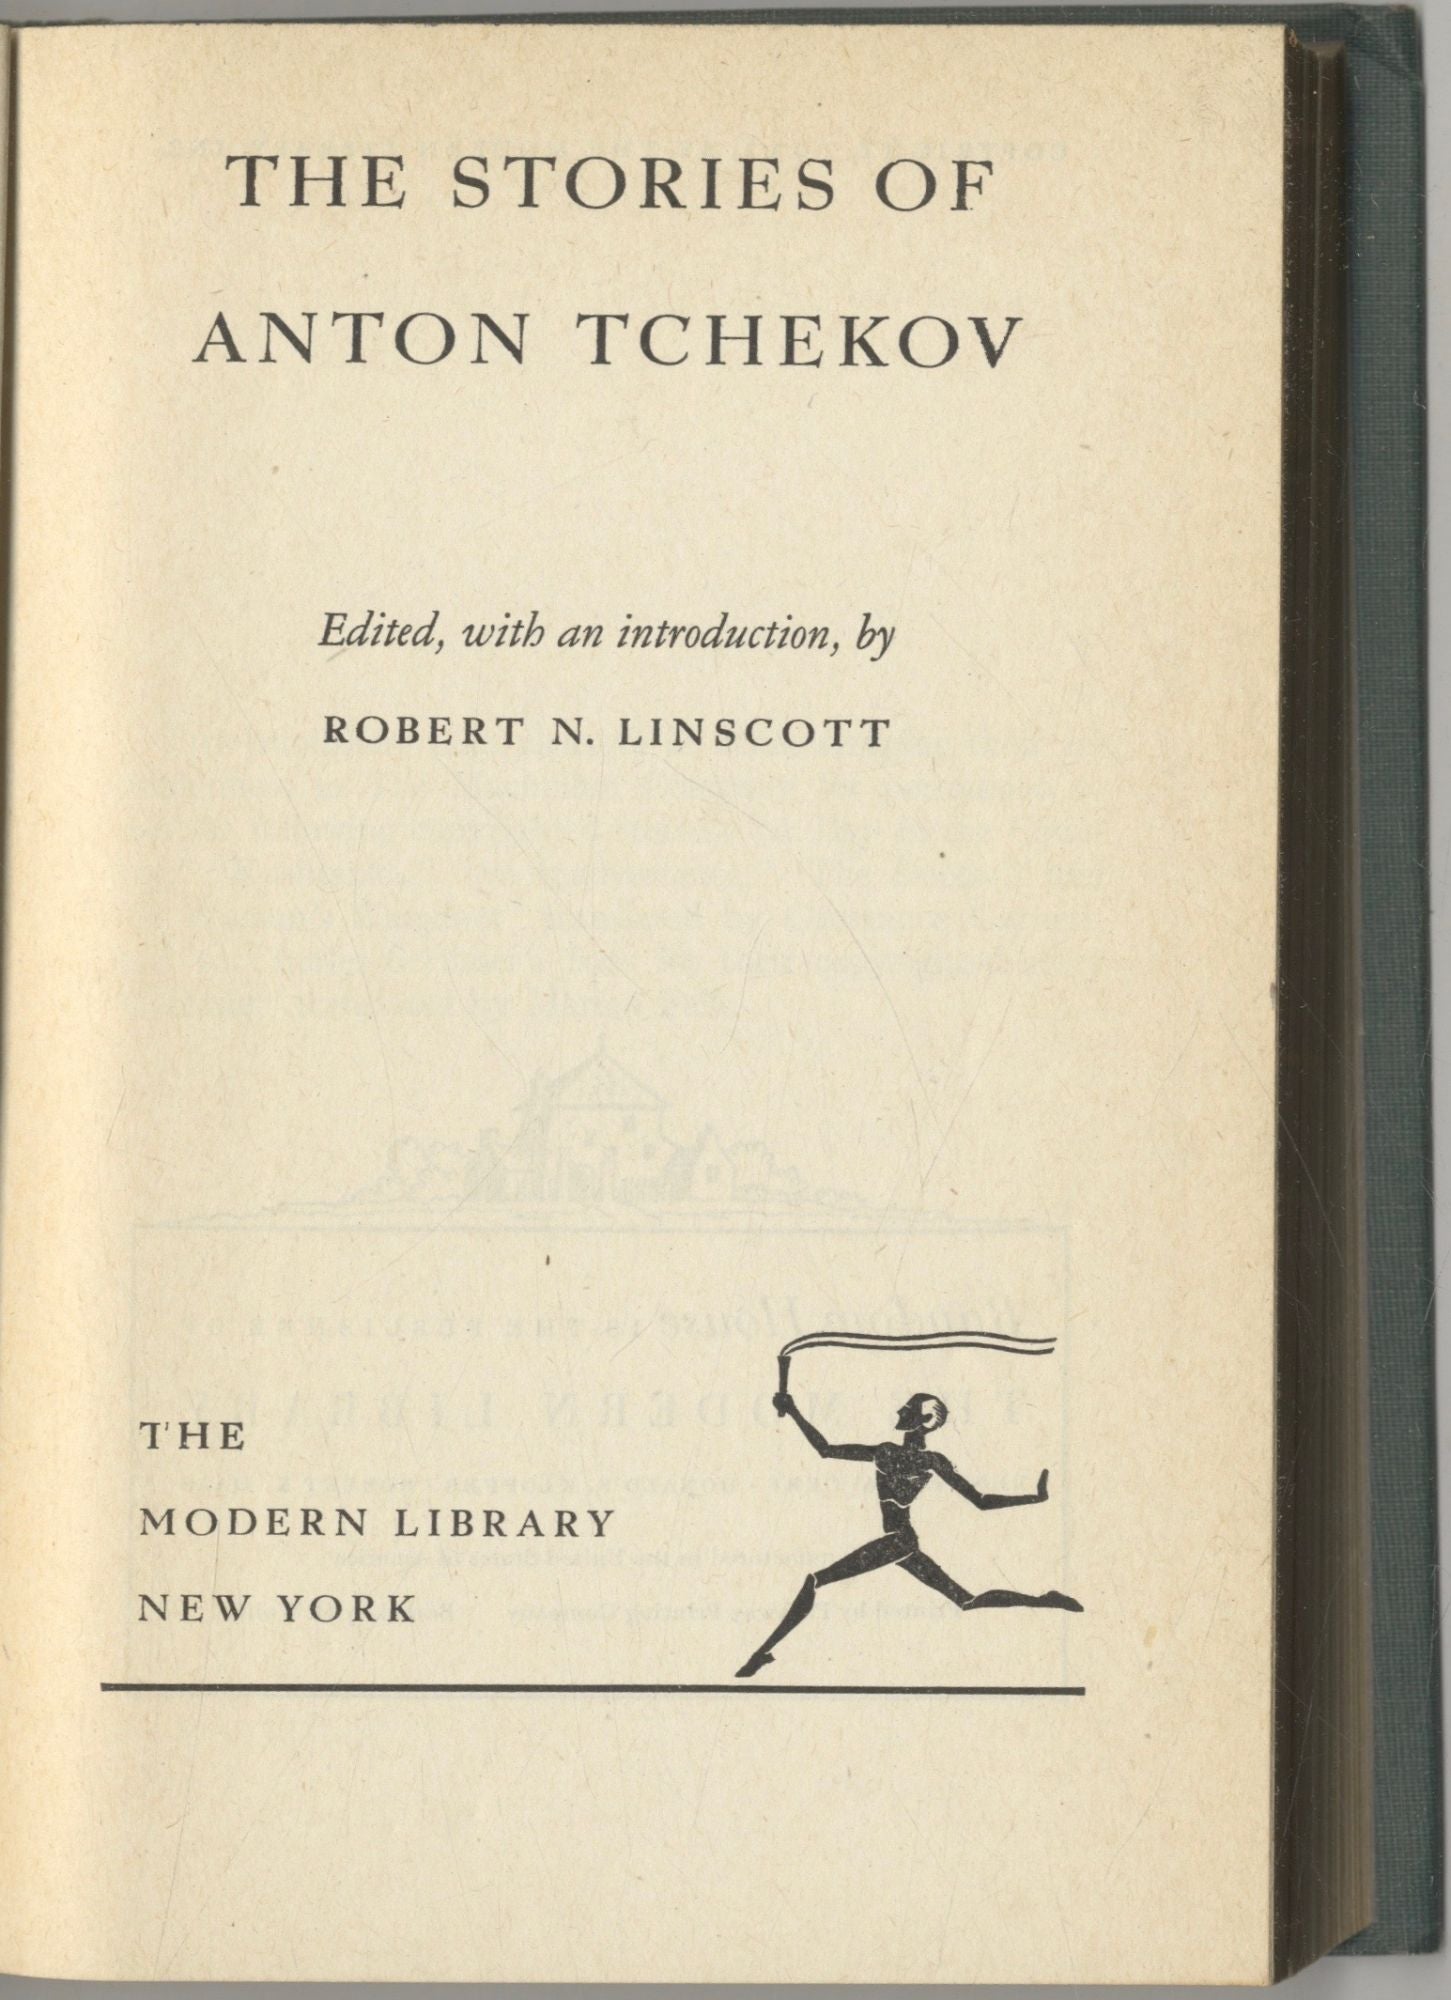 Book #27405 The Stories Of Anton Tchekov. Rober N. Linscott.